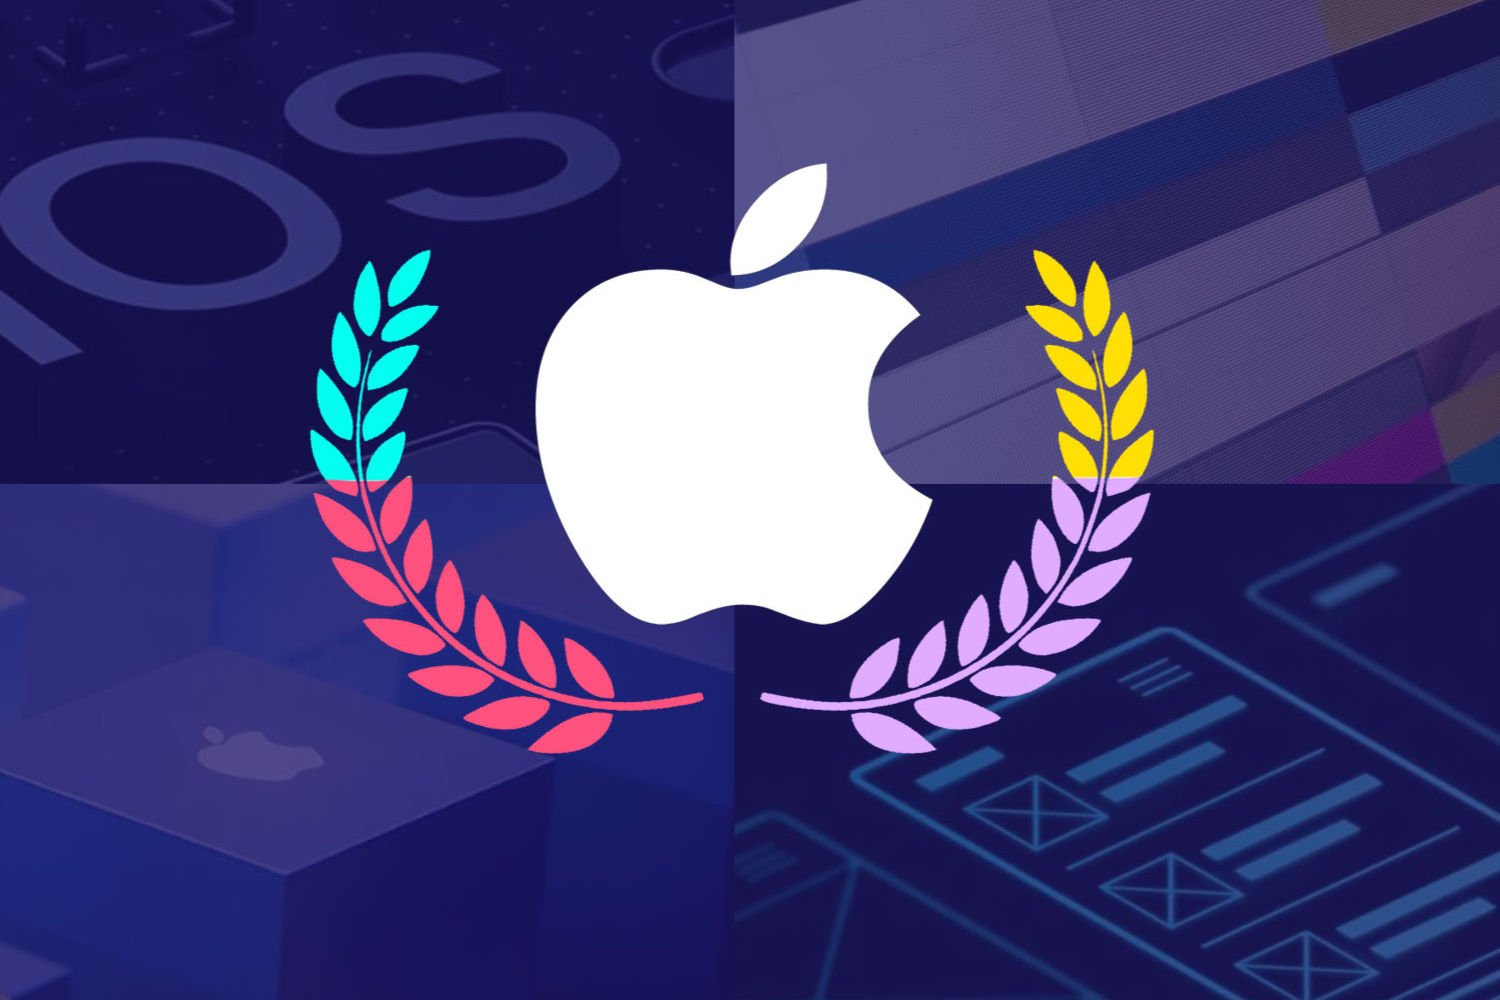 Apple design awards